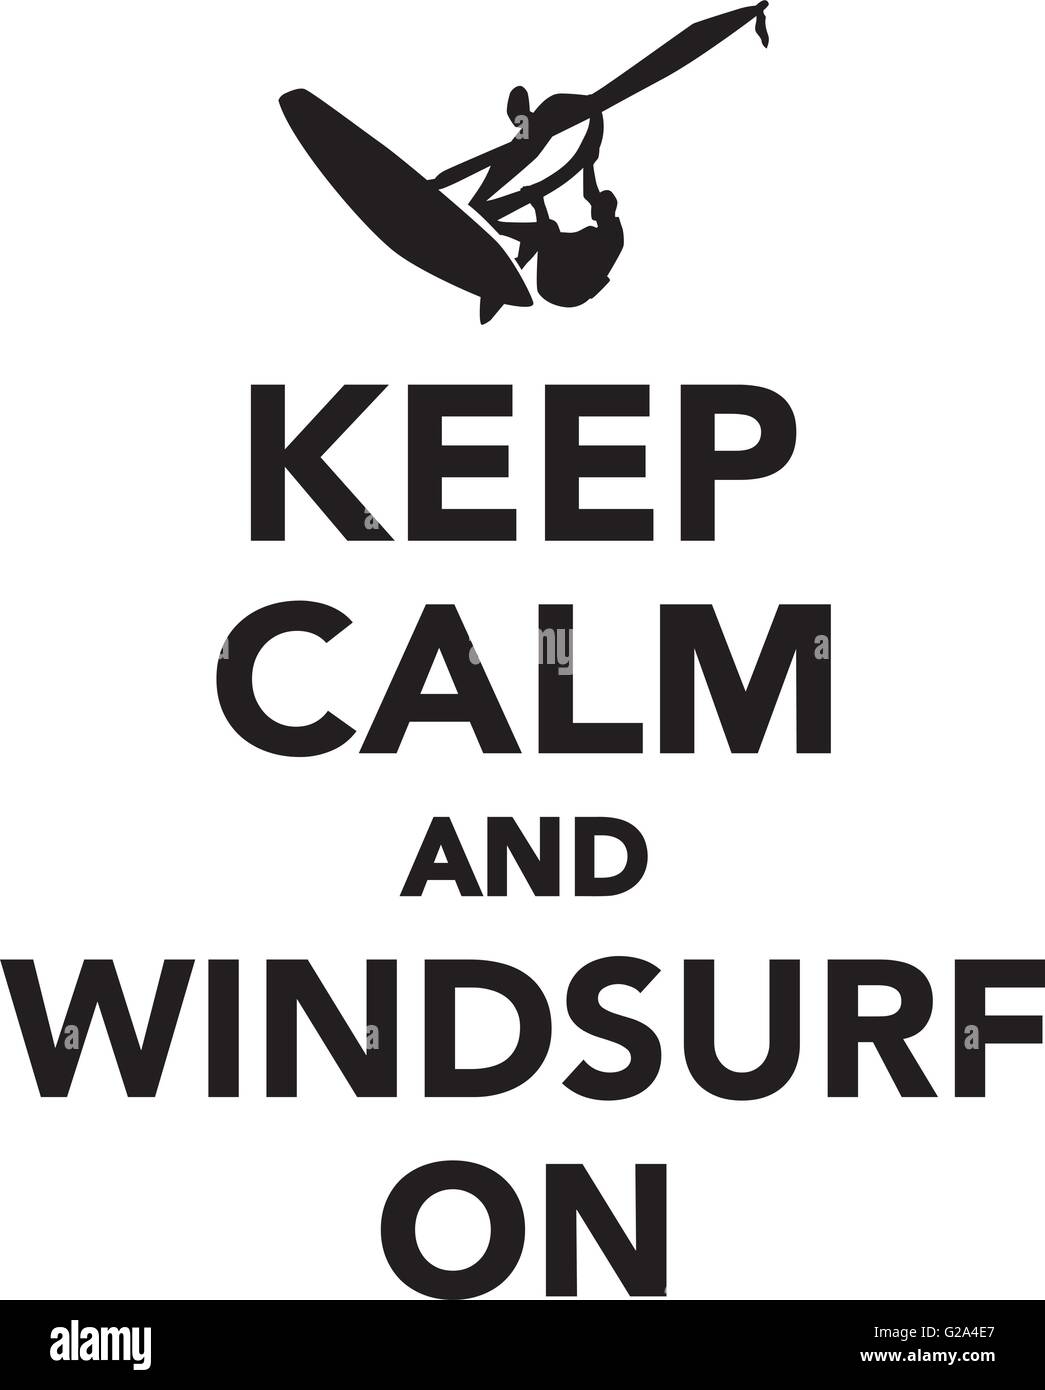 Keep calm and windsurf on Stock Vector